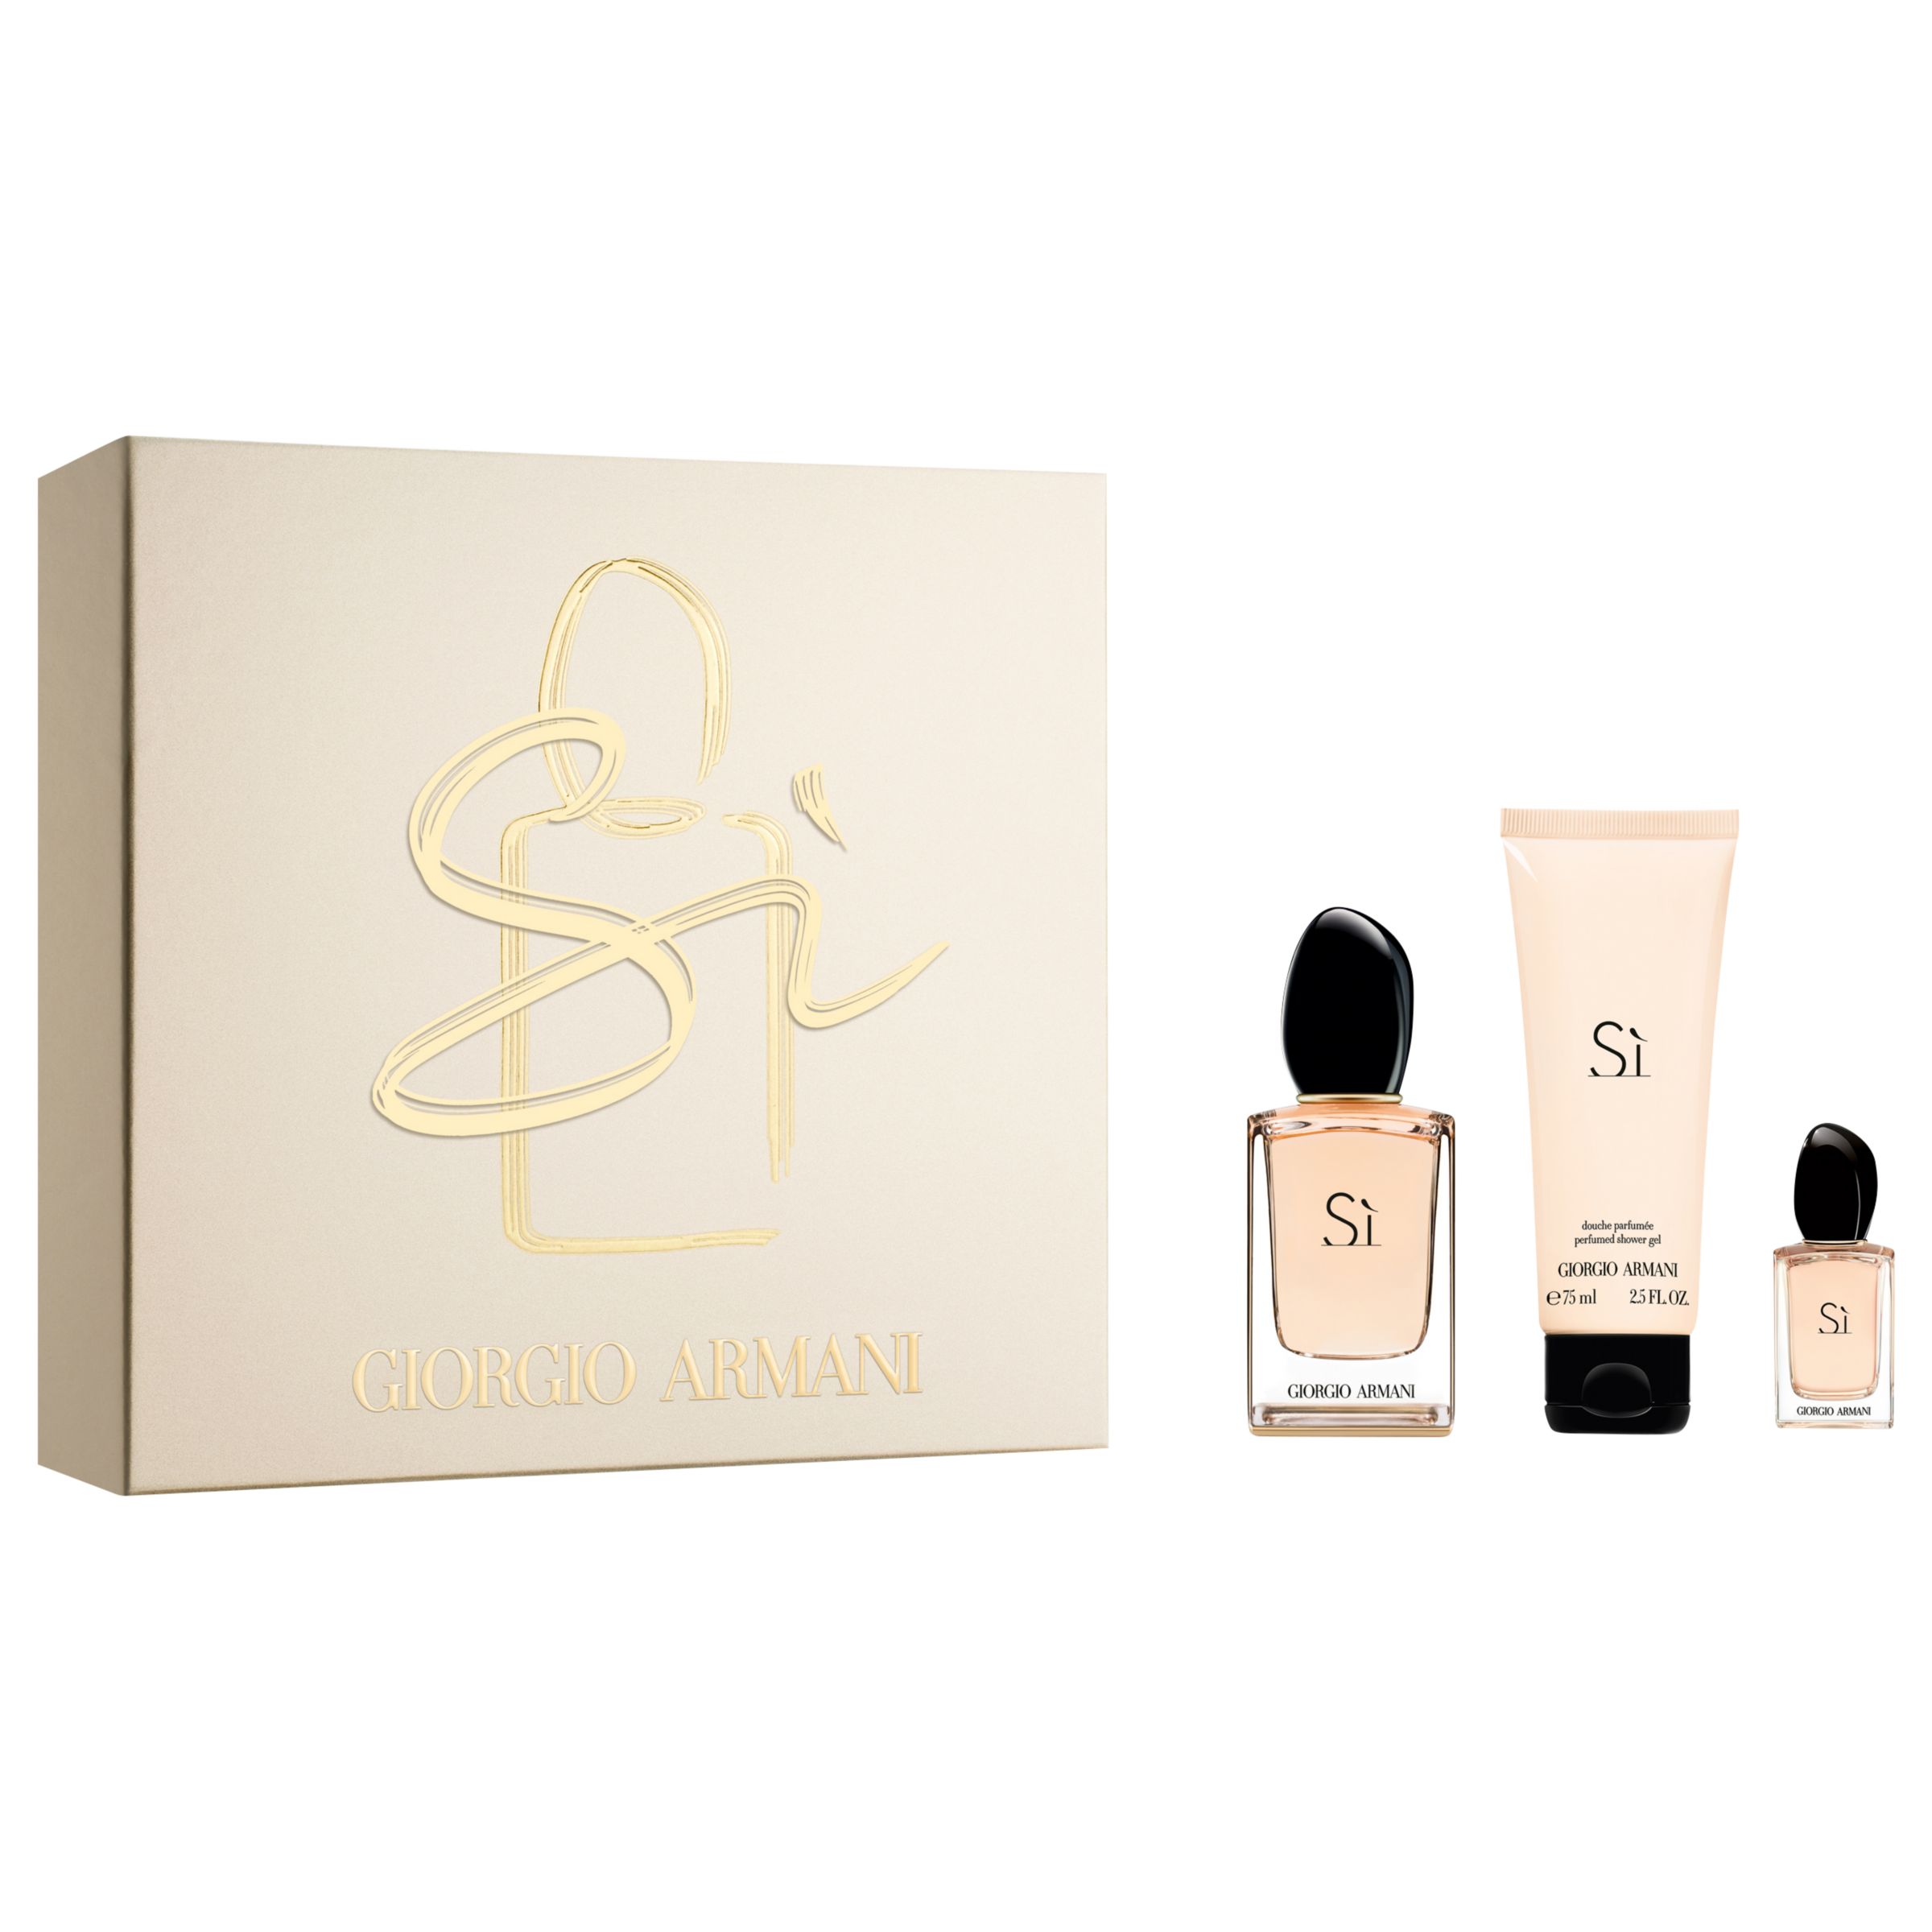 Perfume | Women's Fragrance | John Lewis